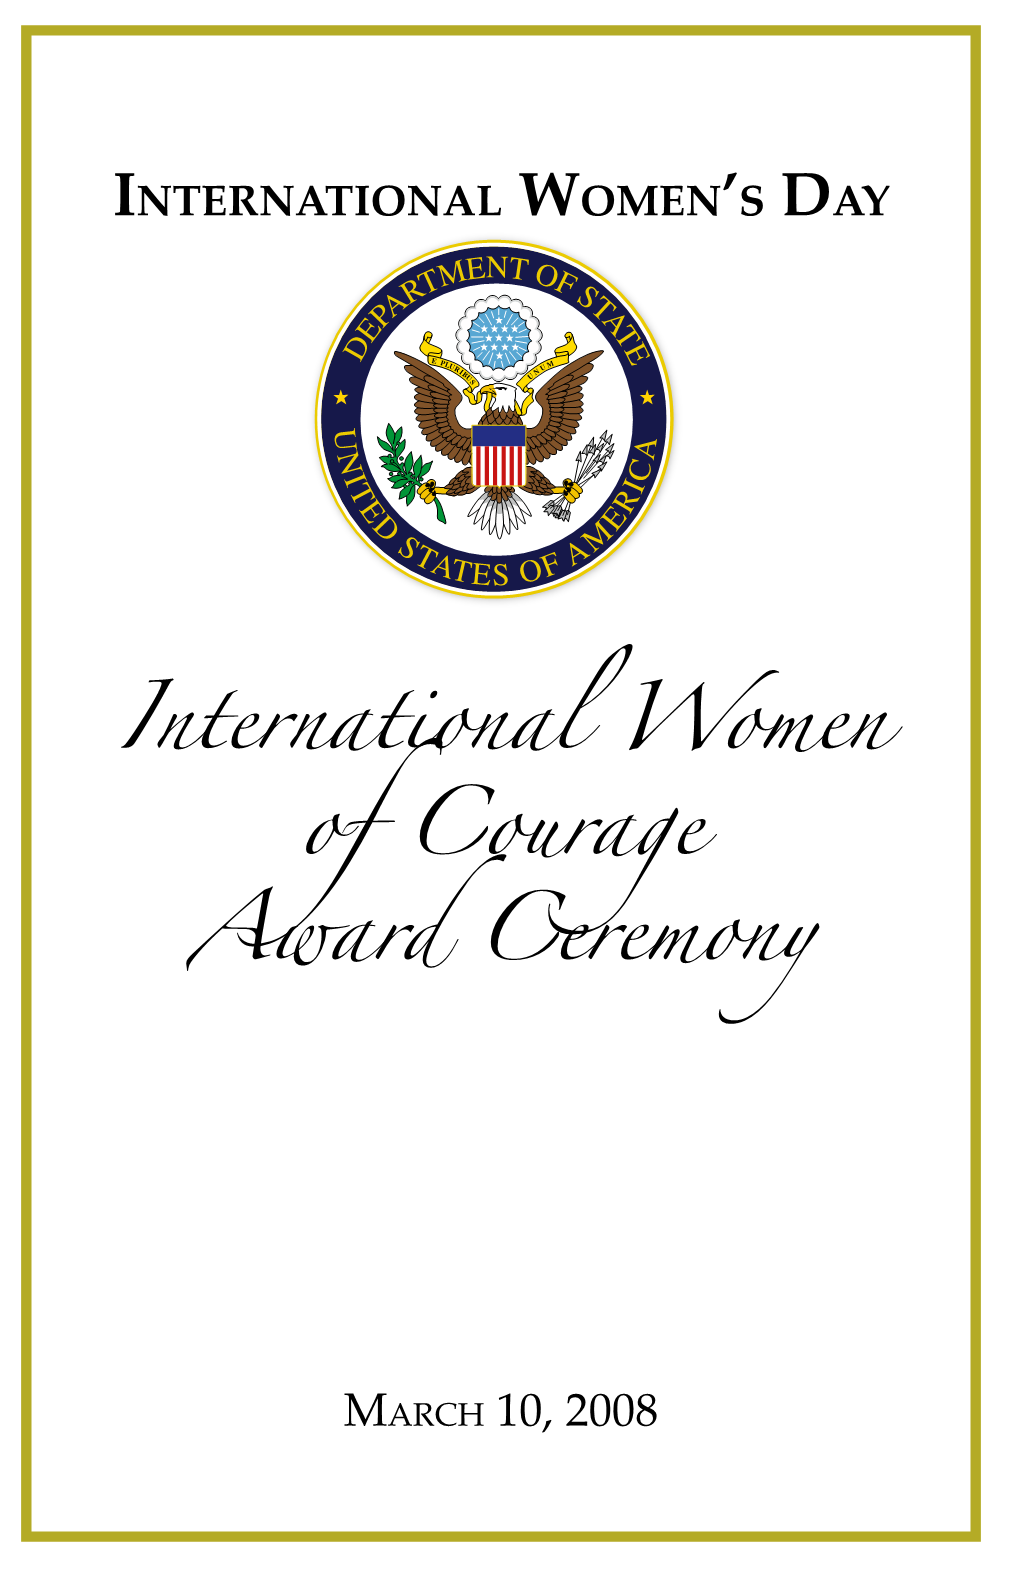 International Women of Courage Award Ceremony Recipients